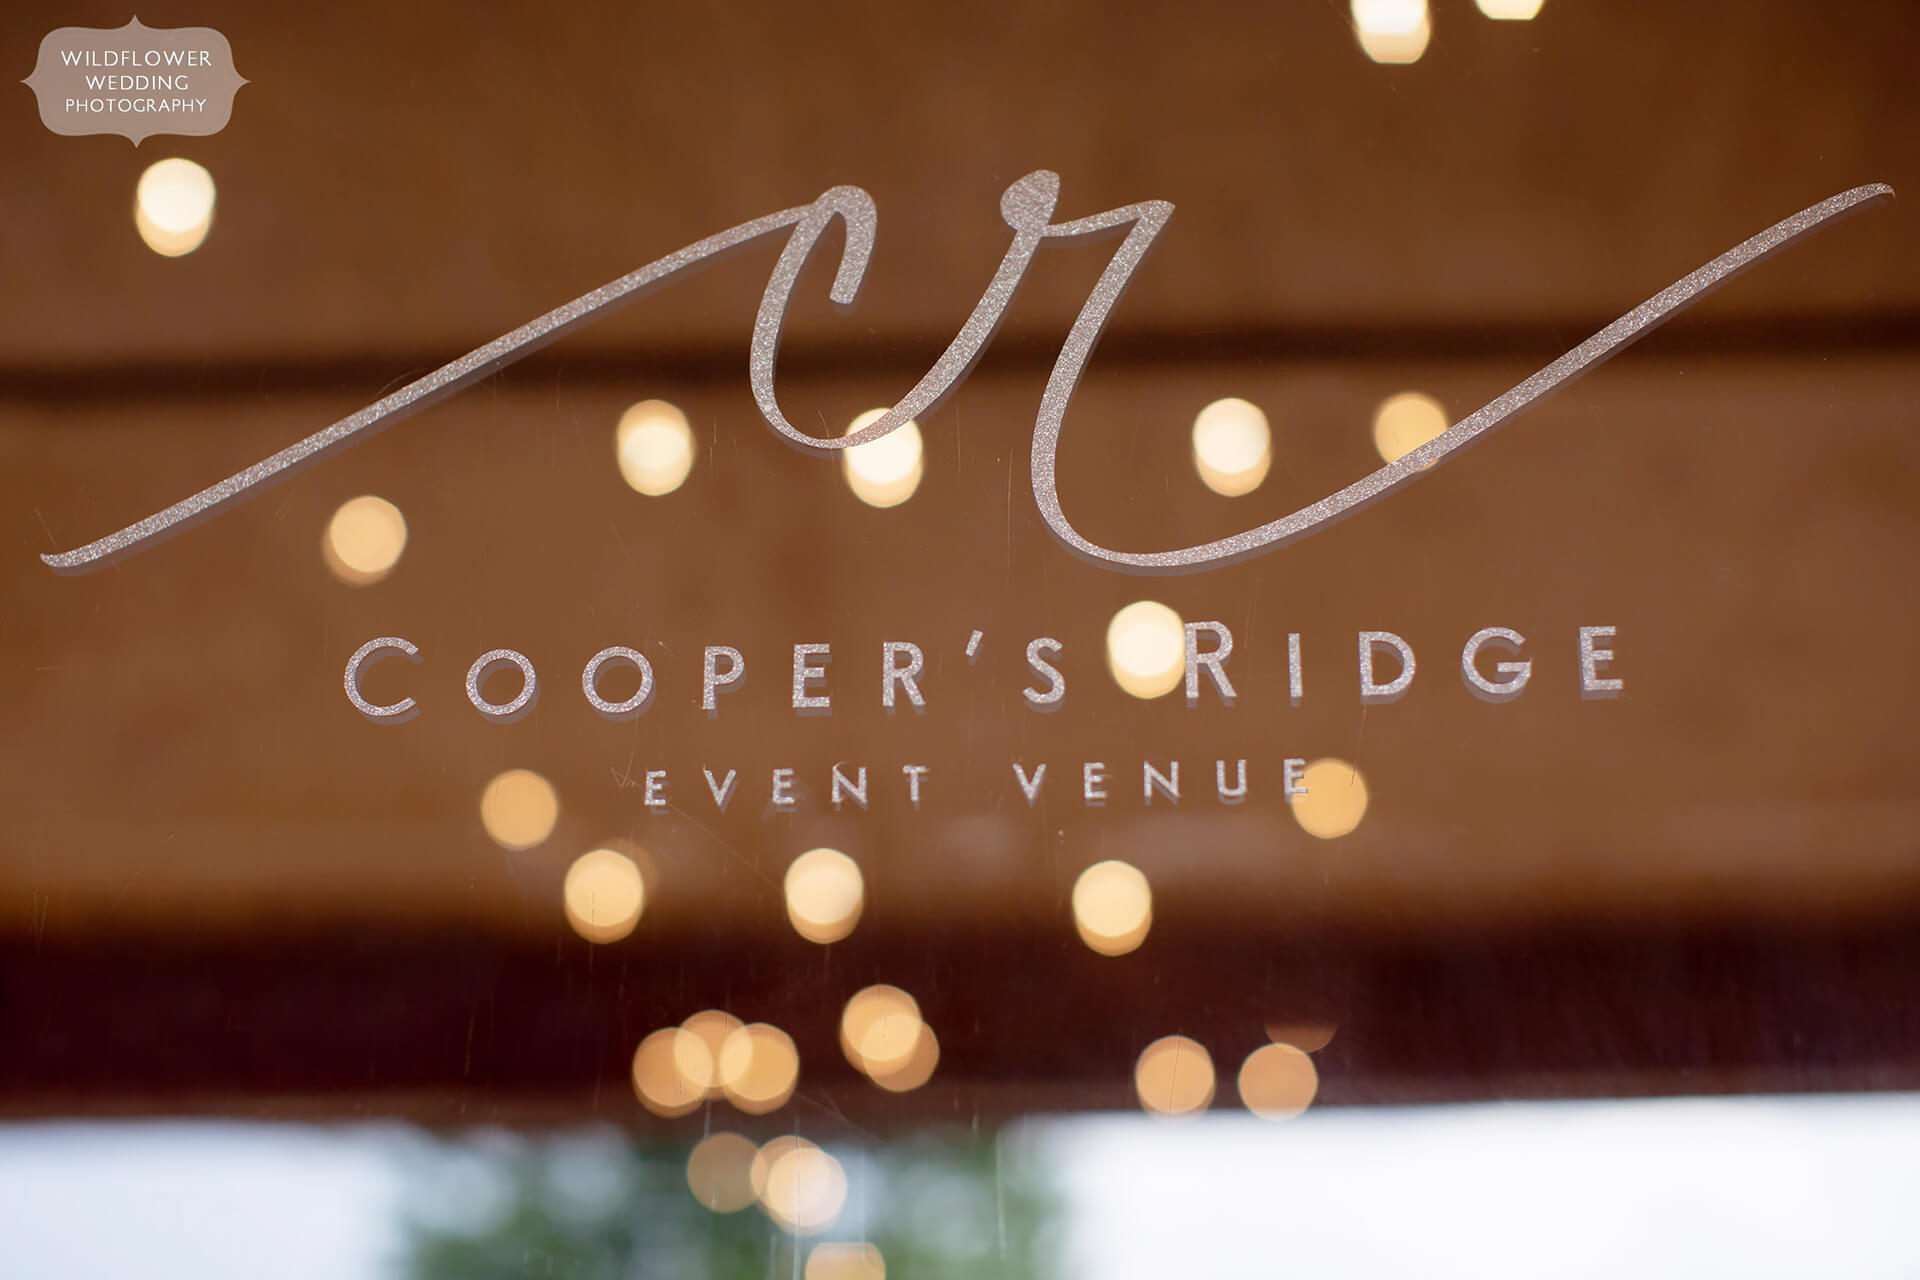 Cooper's Ridge Event Venue logo on reception hall entrance door